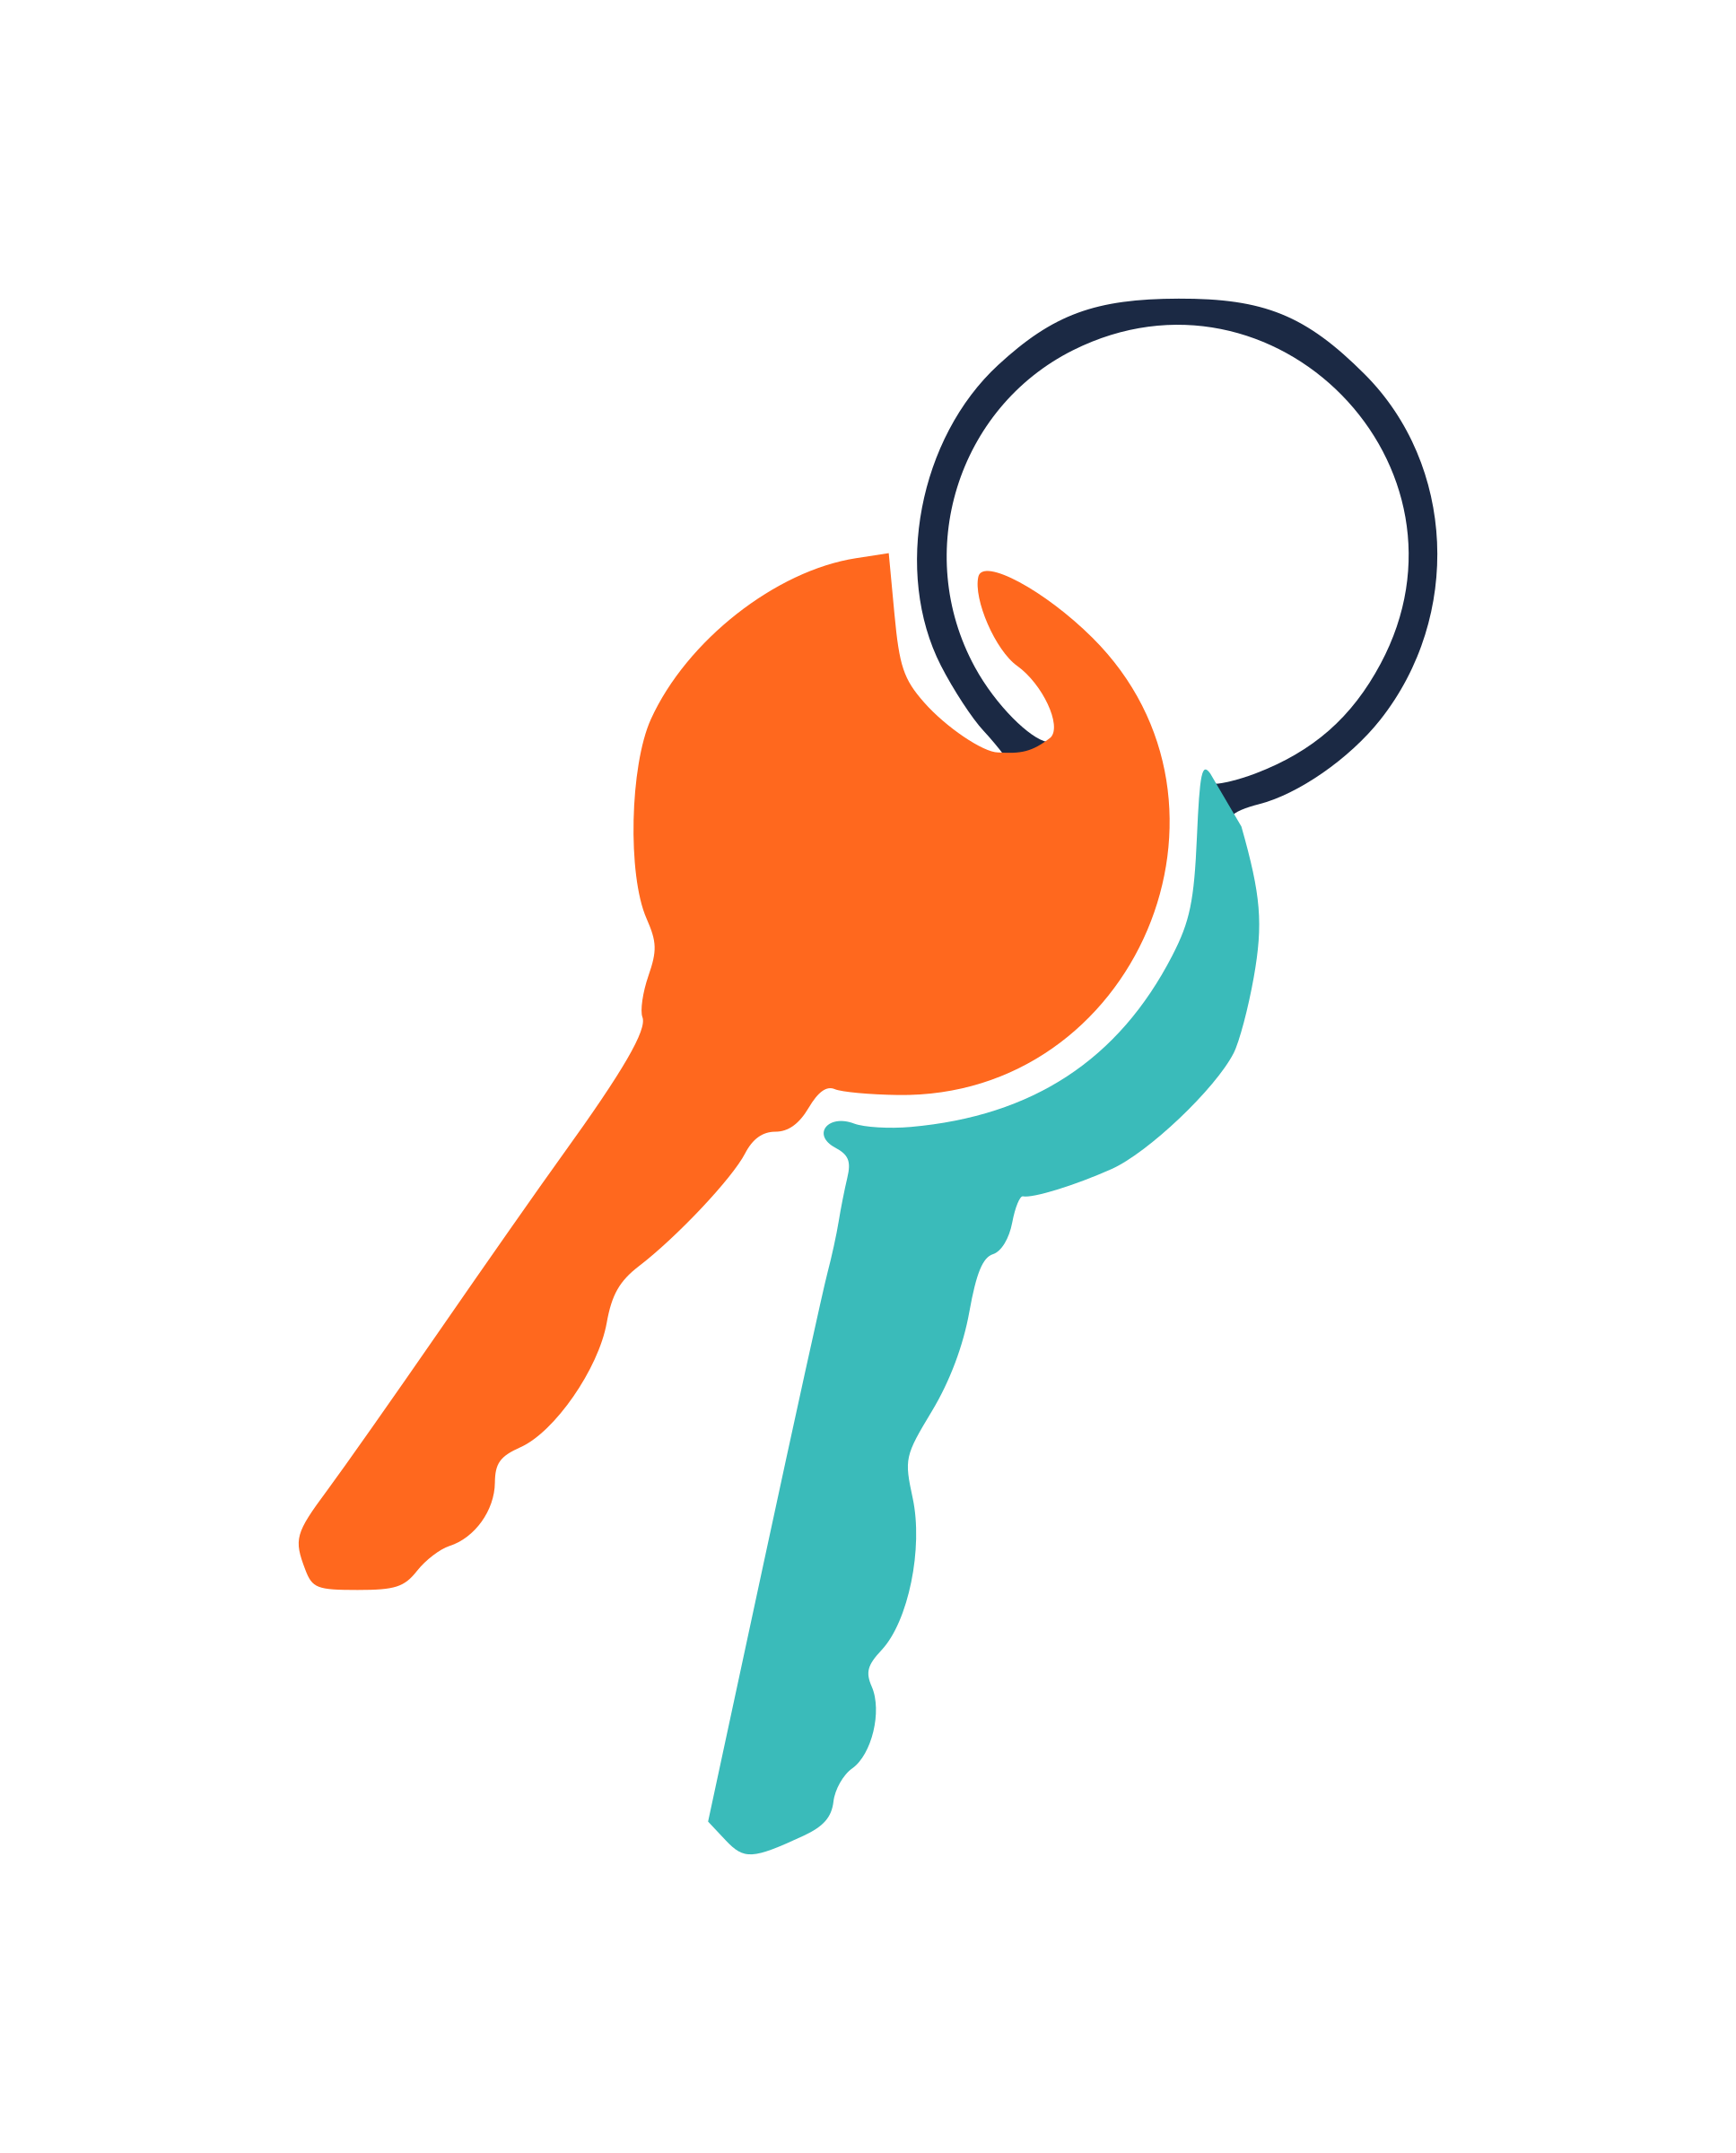 keys clipart icon